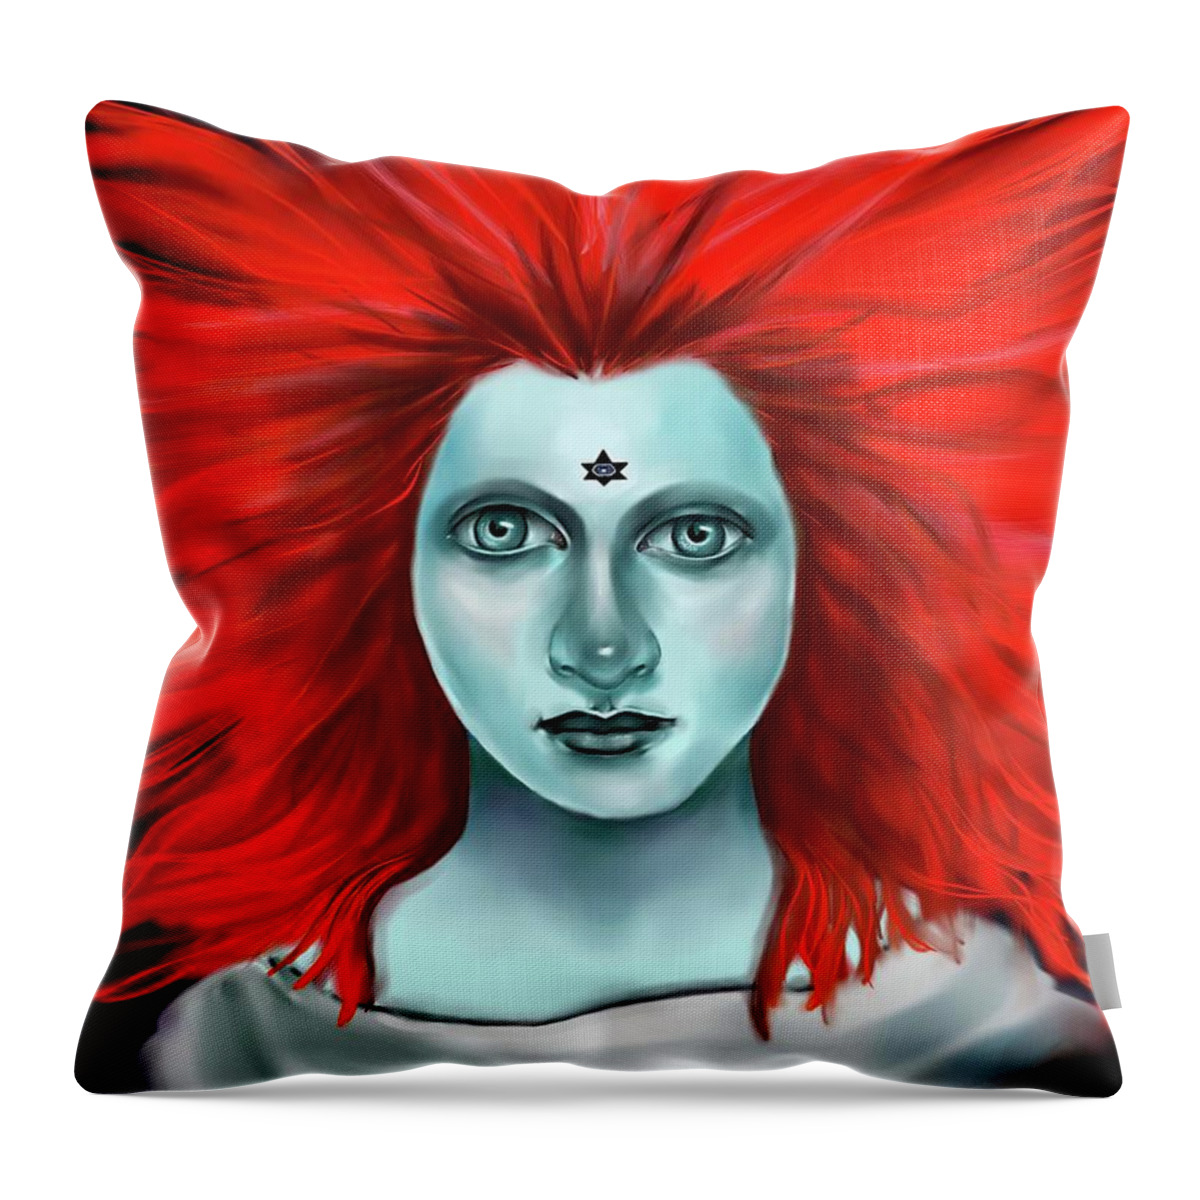 Spiritual Artwork Throw Pillow featuring the digital art Spirit Wind by Carmen Cordova